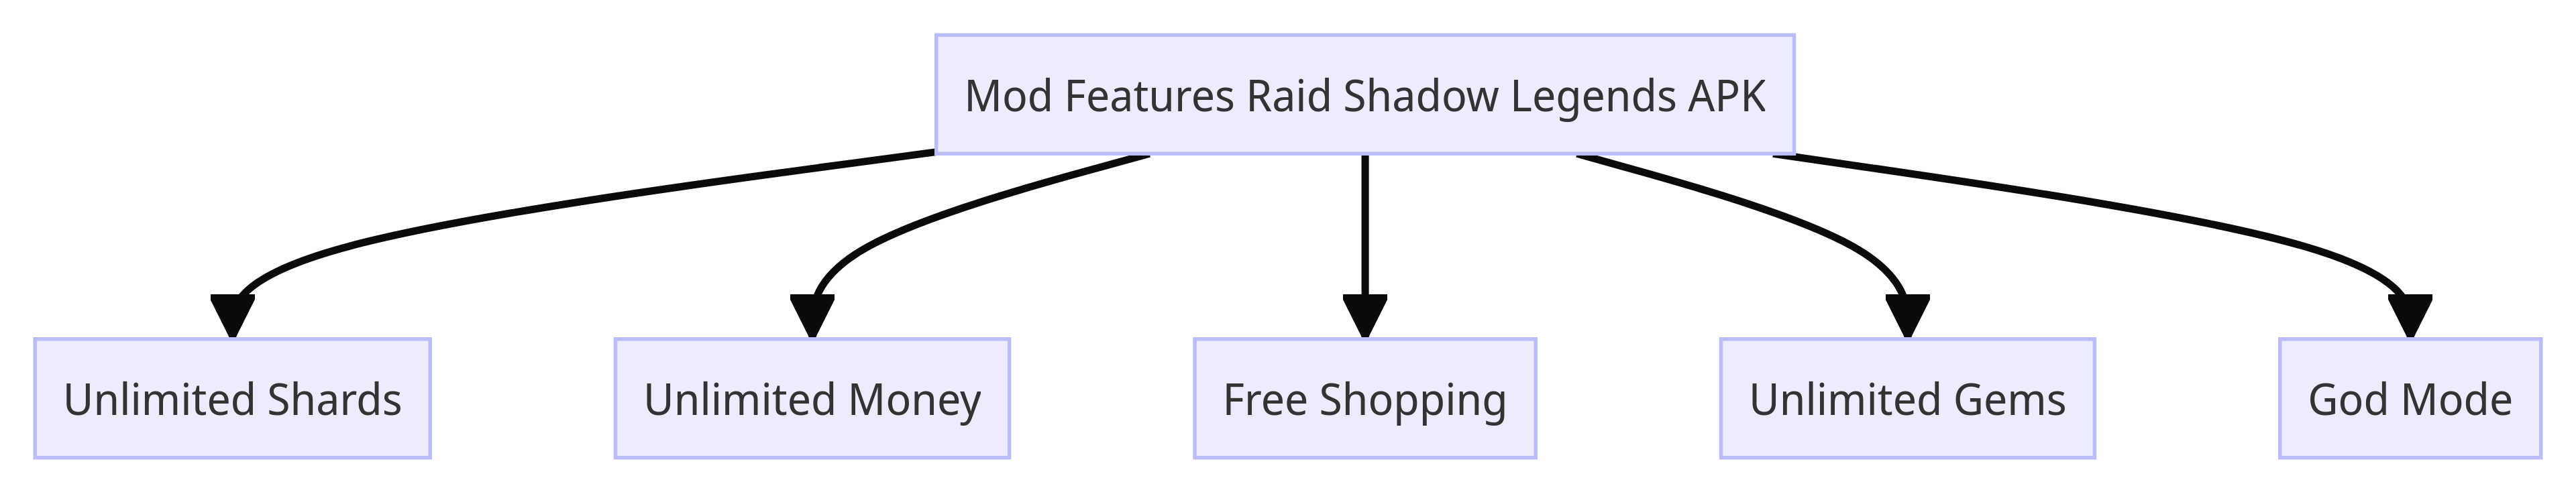 Mod Features Raid Shadow Legends APK